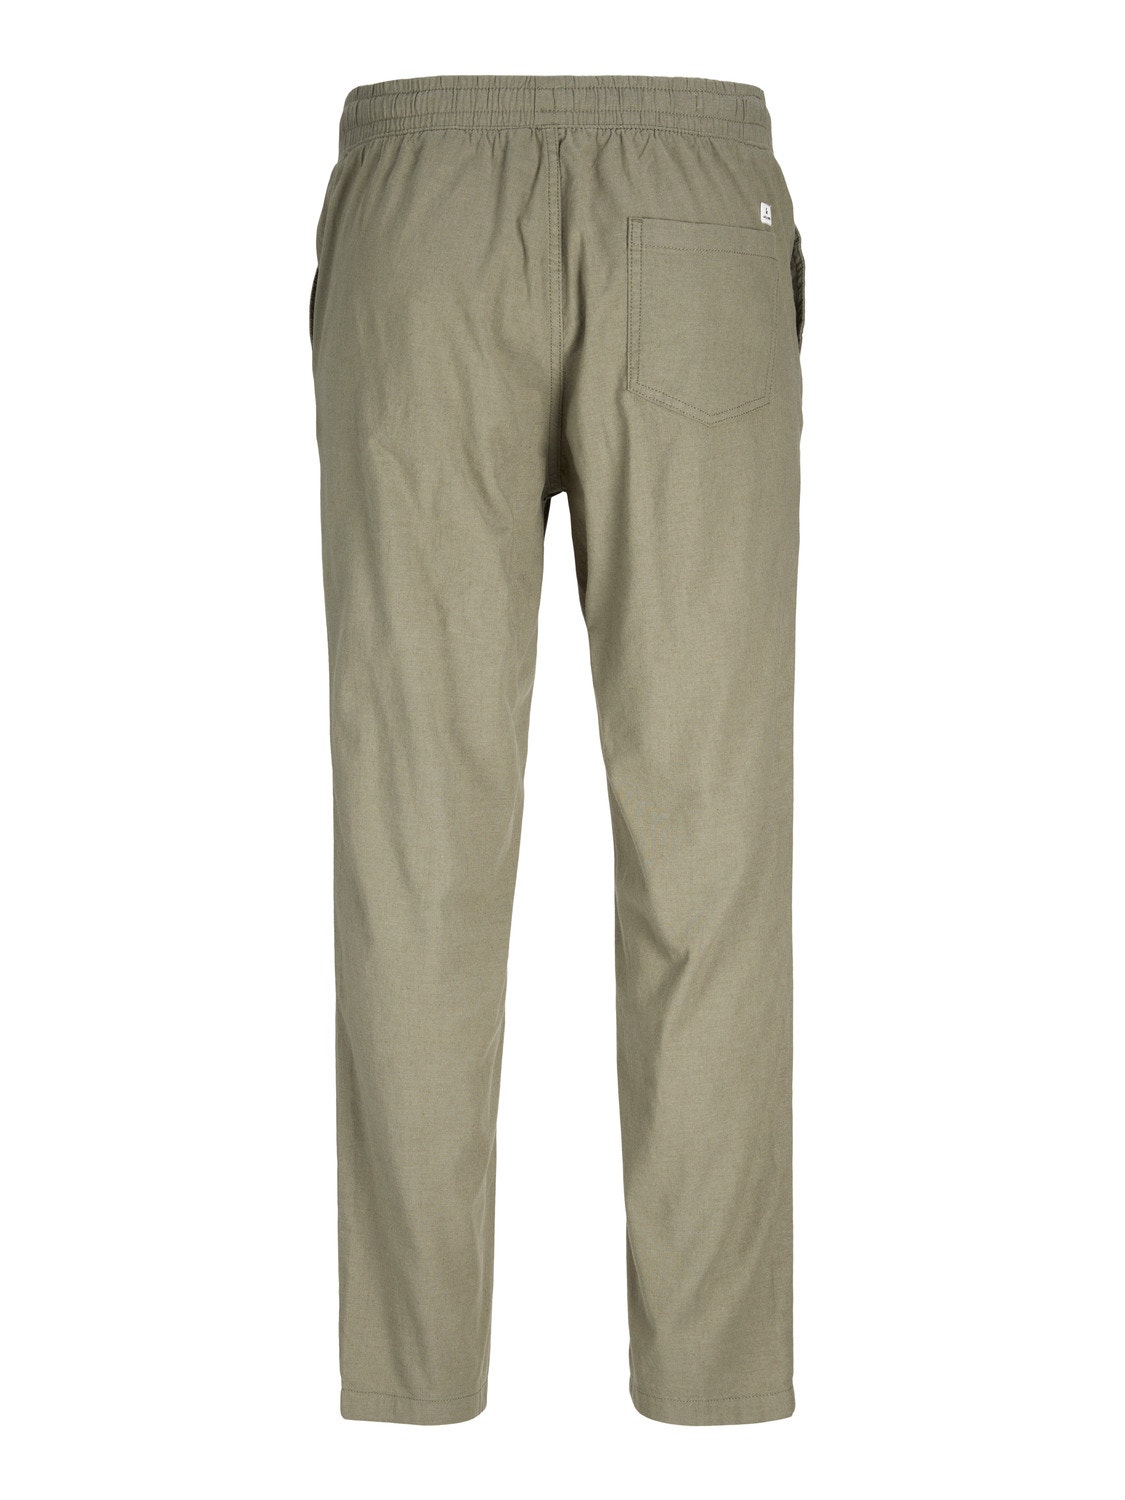 Jack & Jones Tapered Fit Klasyczne spodnie -Deep Lichen Green - 12229699